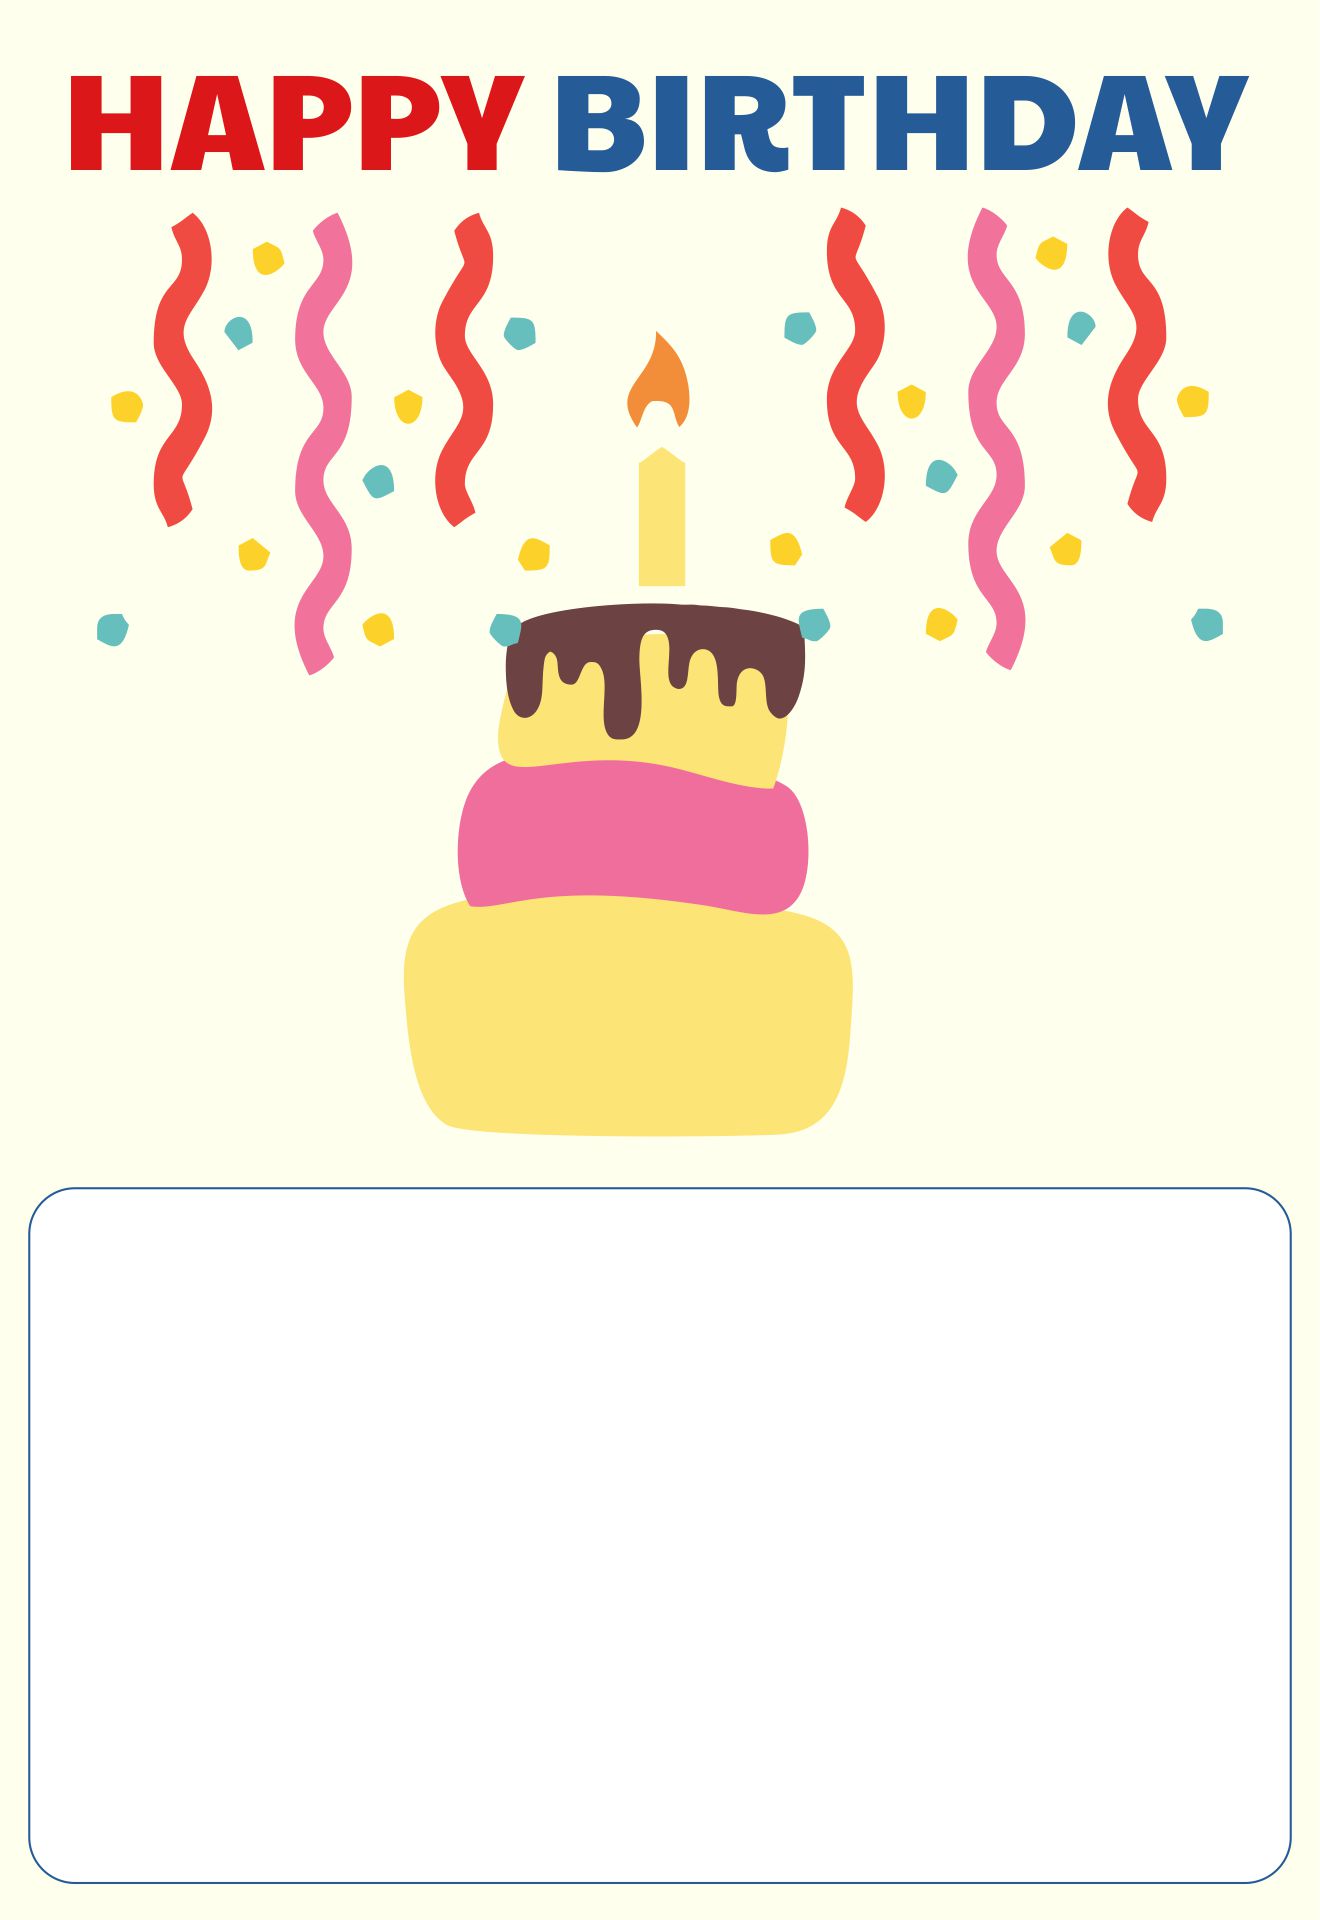 Happy Birthday Letters Template - 10 Free PDF Printables | Printablee